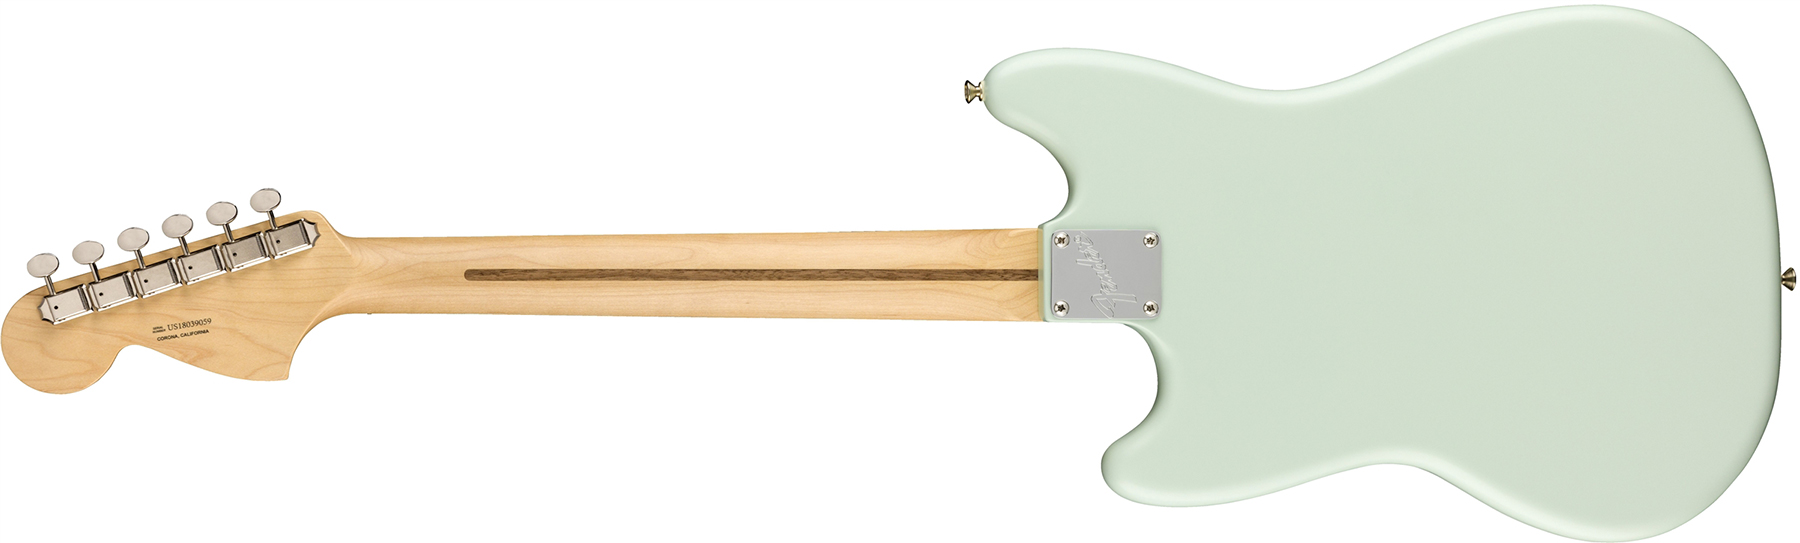 Fender Mustang American Performer Usa Ss Rw - Satin Sonic Blue - Double Cut E-Gitarre - Variation 1